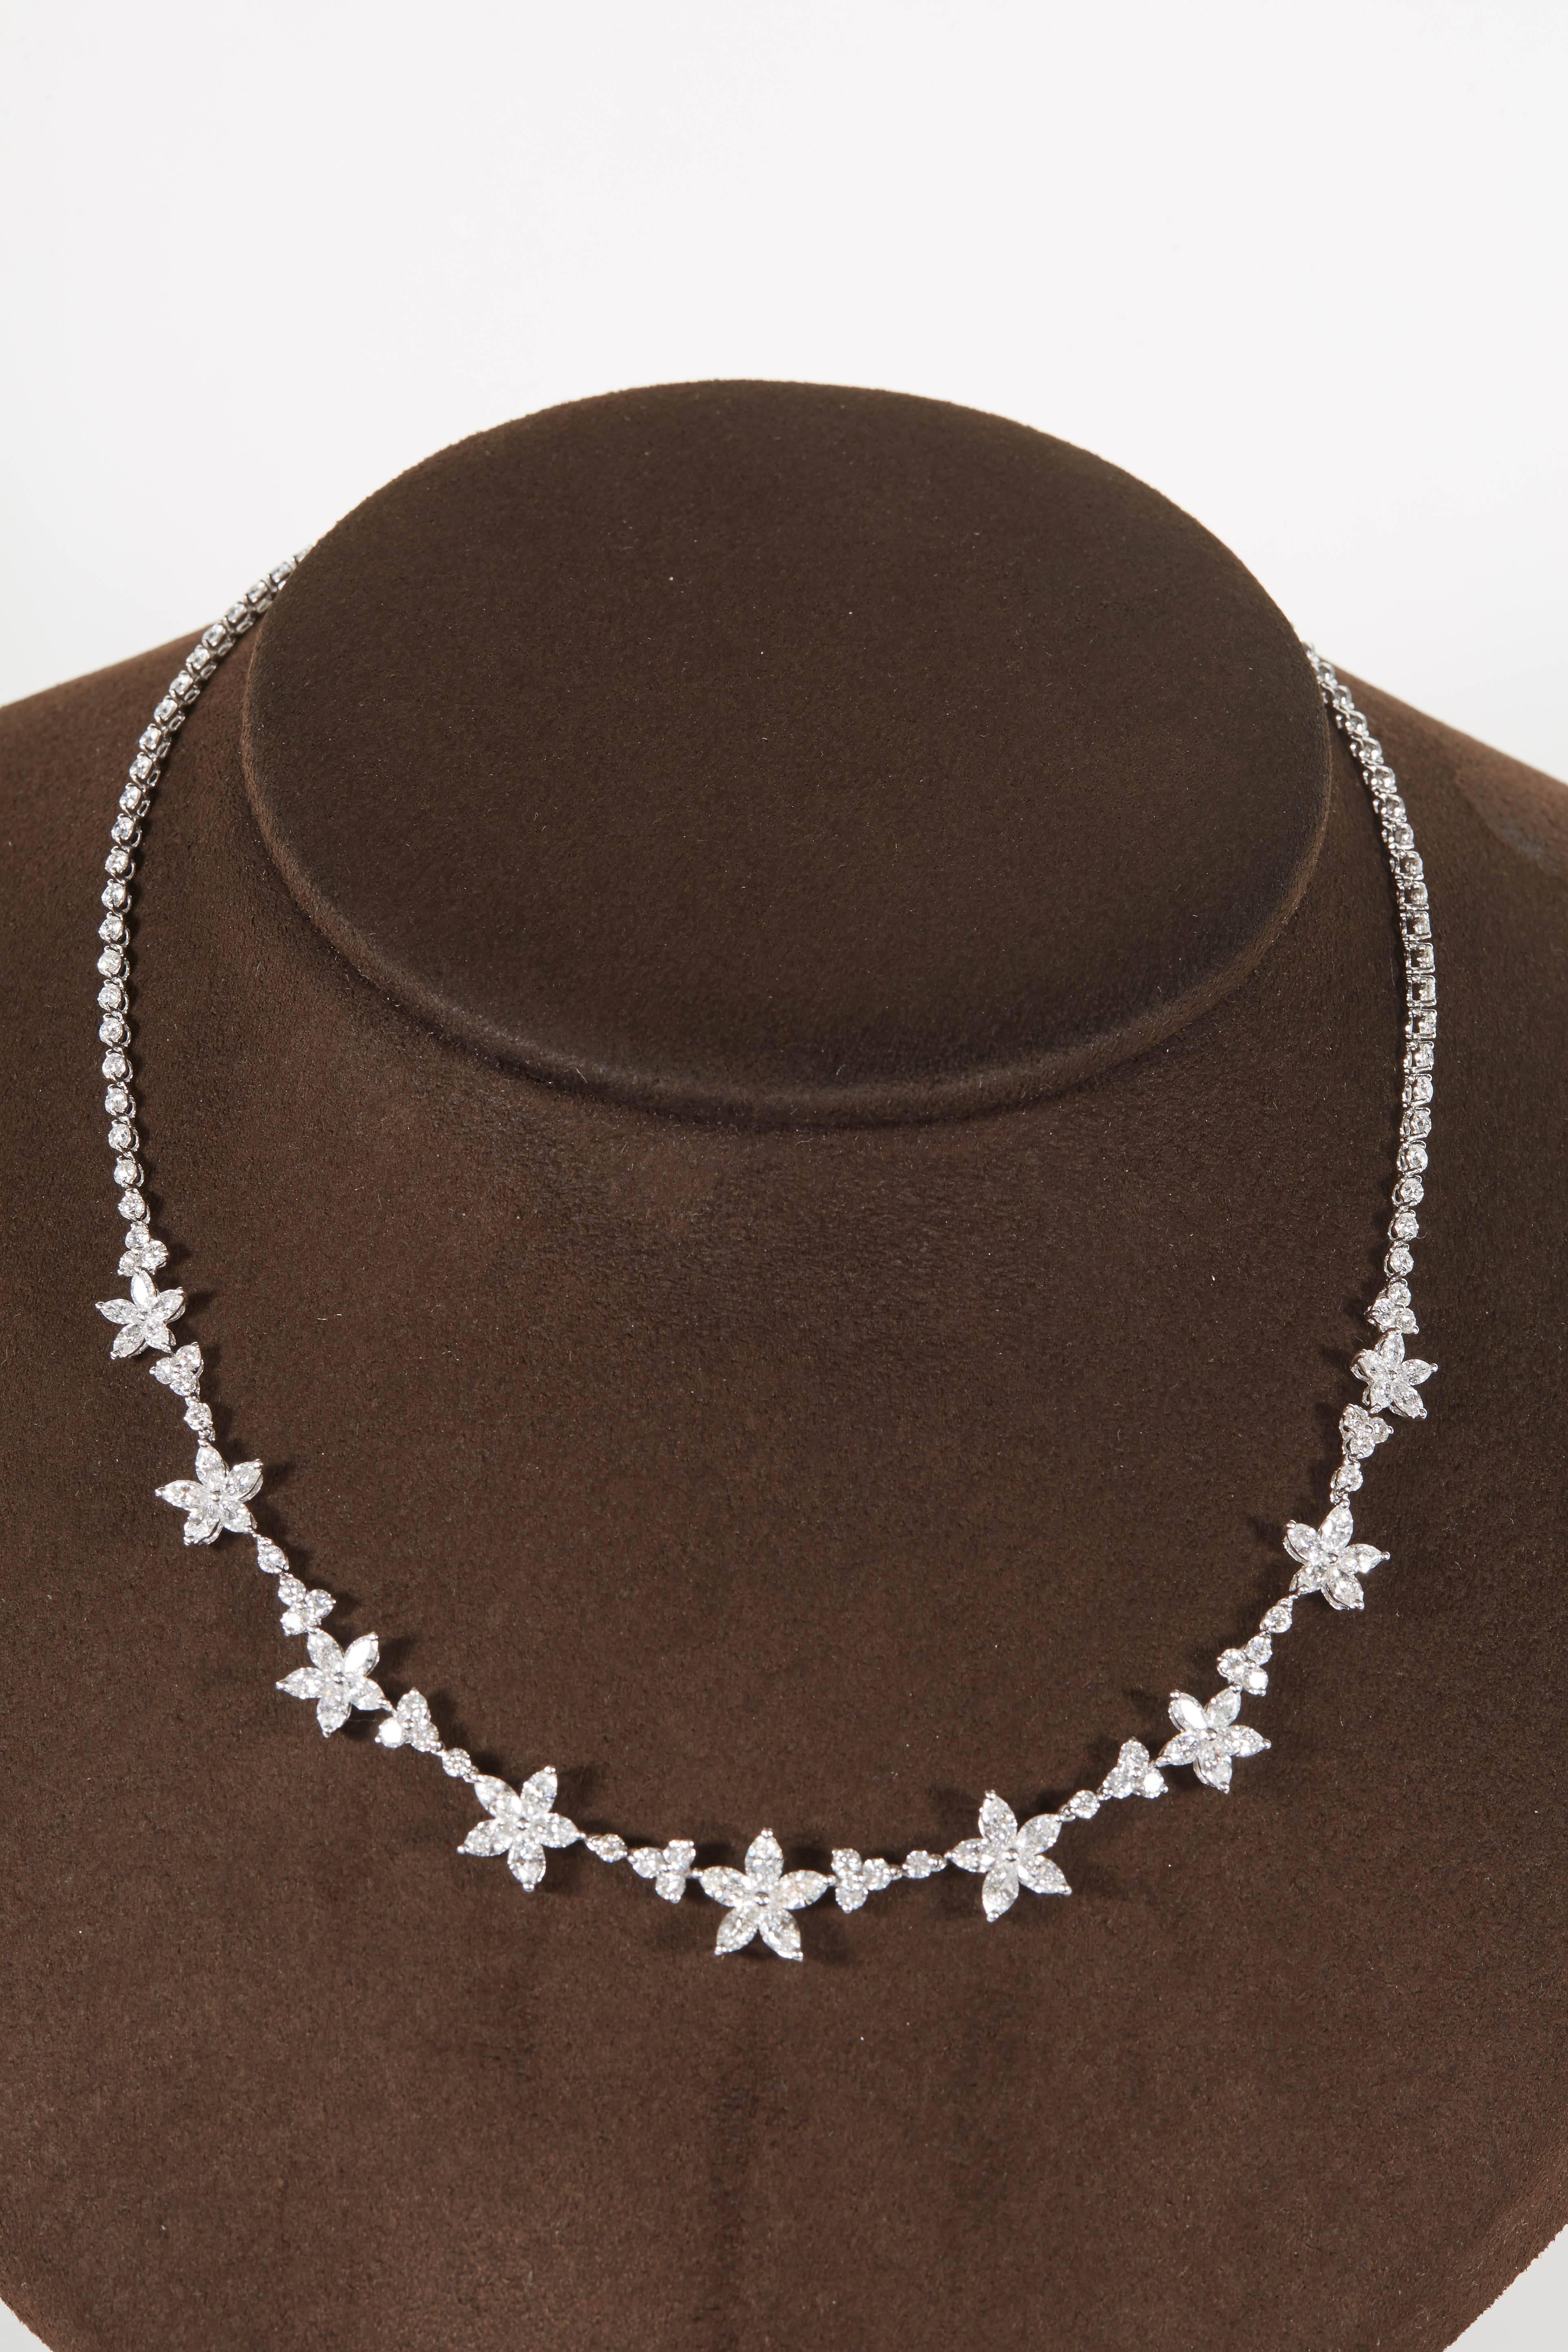 Marquise Cut Diamond Necklace